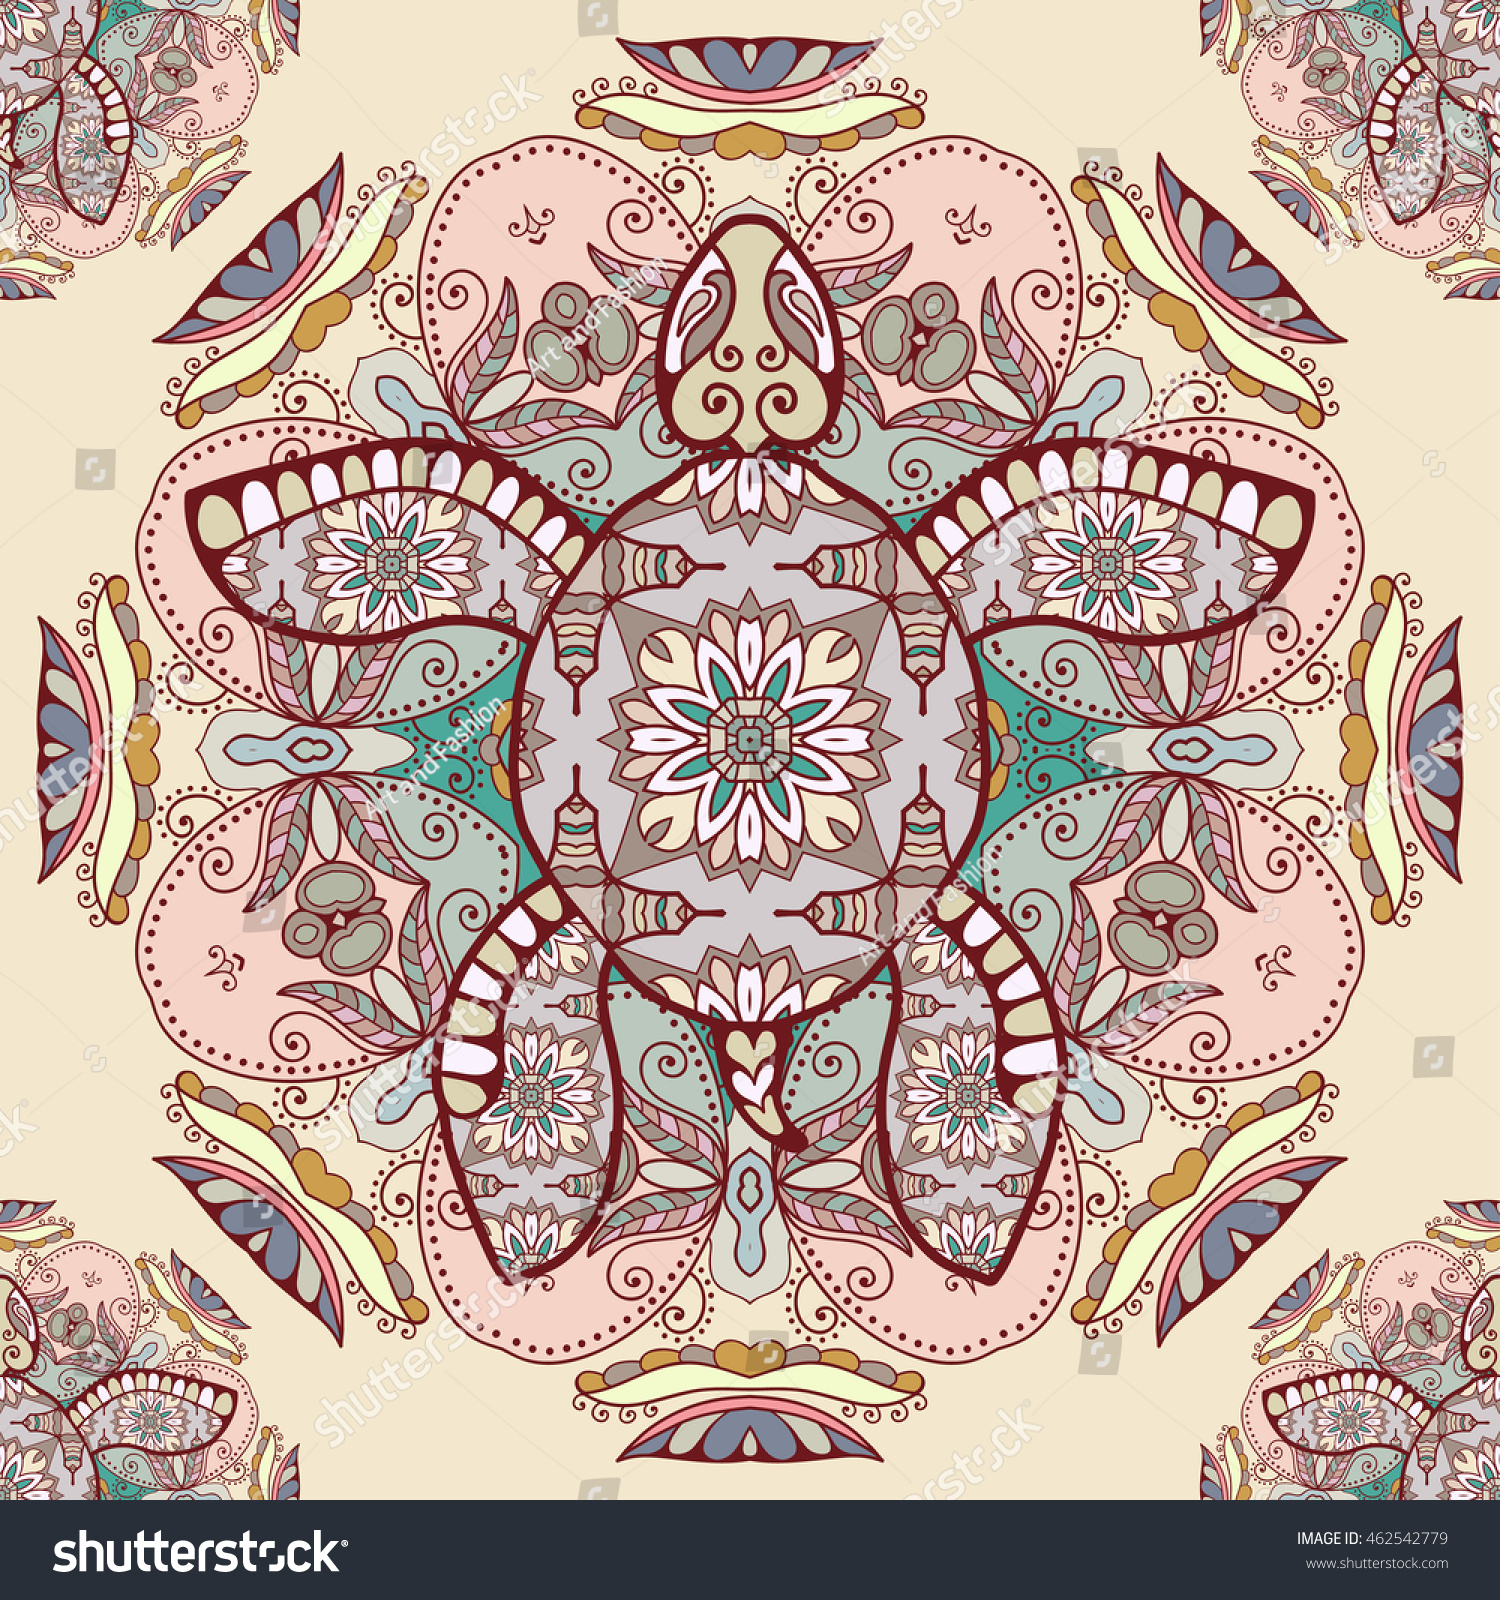 SVG of Seamless mandala pattern with decorative stylized turtle. Vector tribal totem animal illustration. Zentangle style seamless background svg